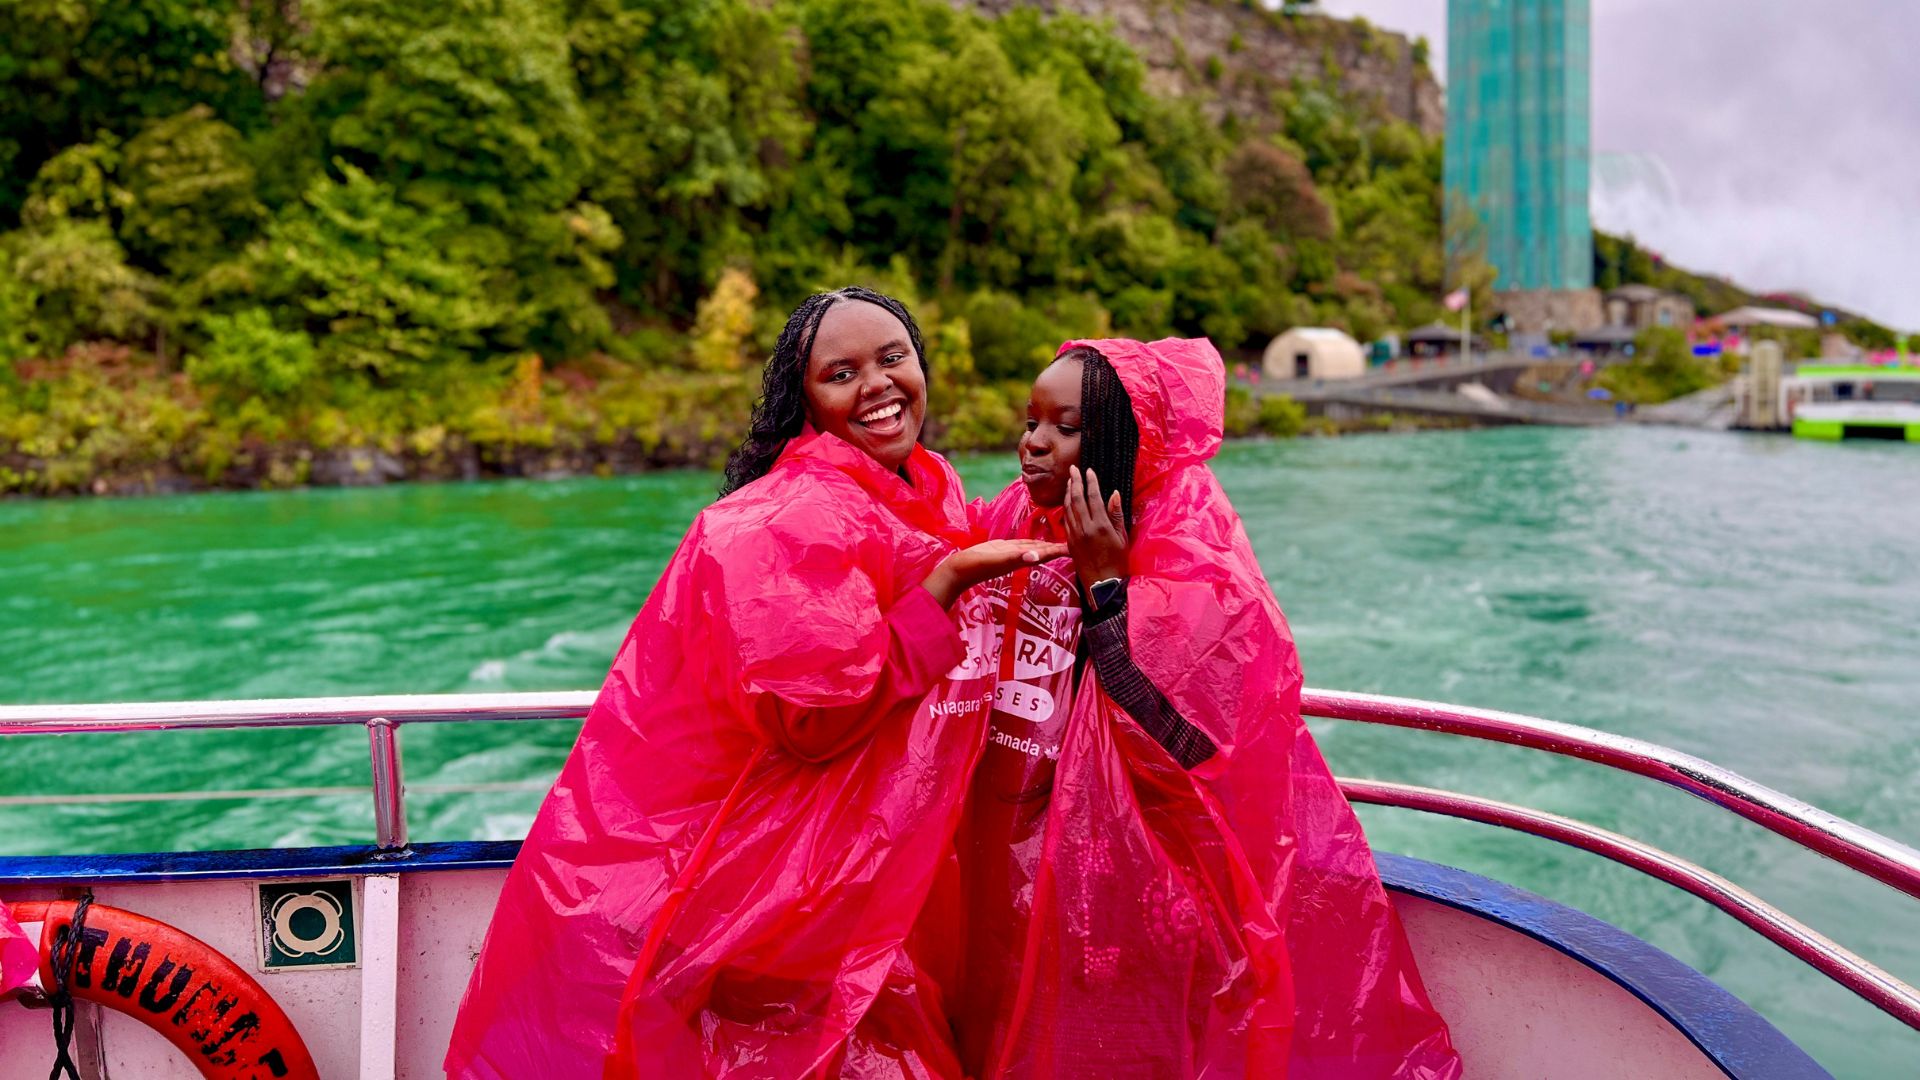 Christina Jane and Christina in Canada on a boat ride at the Niagara Falls.